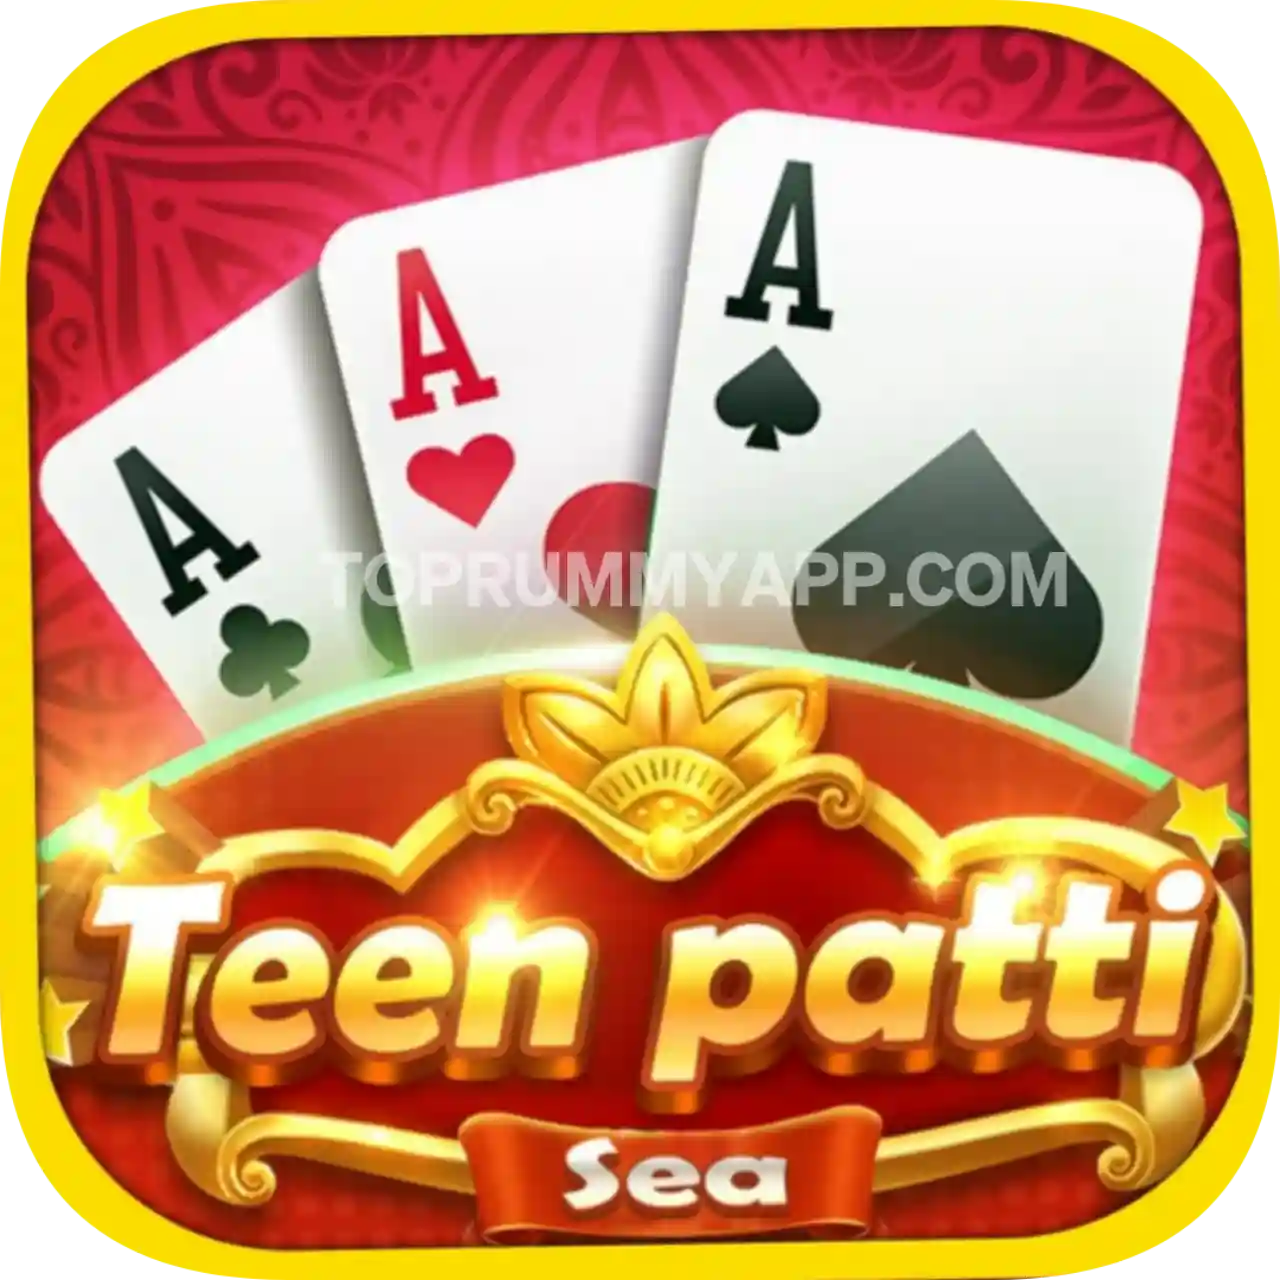 Teen Patti Sea Apk Download - All Dragon Vs Tiger App List 51 Bonus